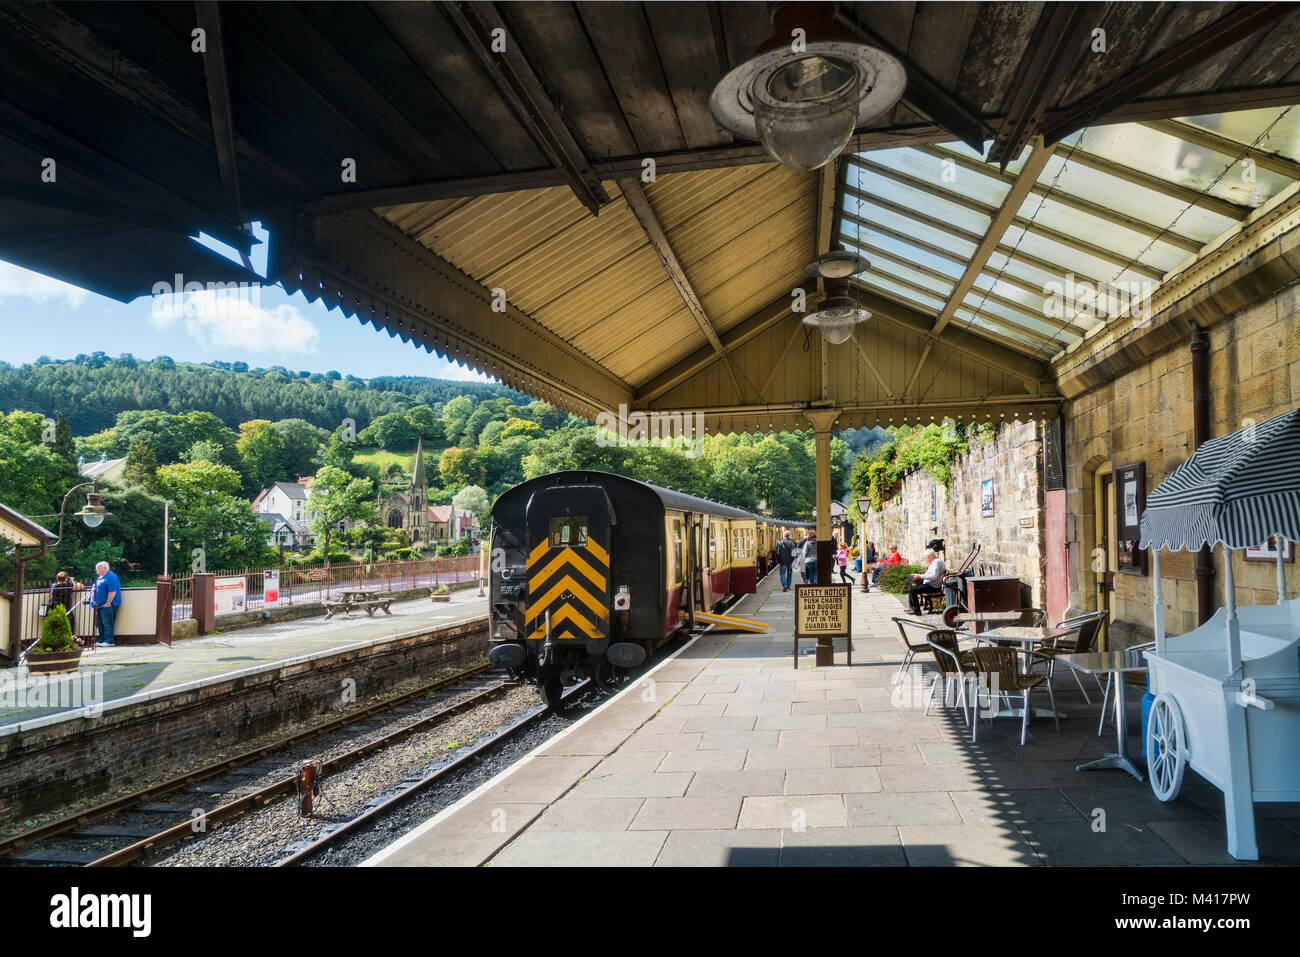 Llangollen Railway Station and River Dee, Denbighshire, Wales, UK Stock Photo